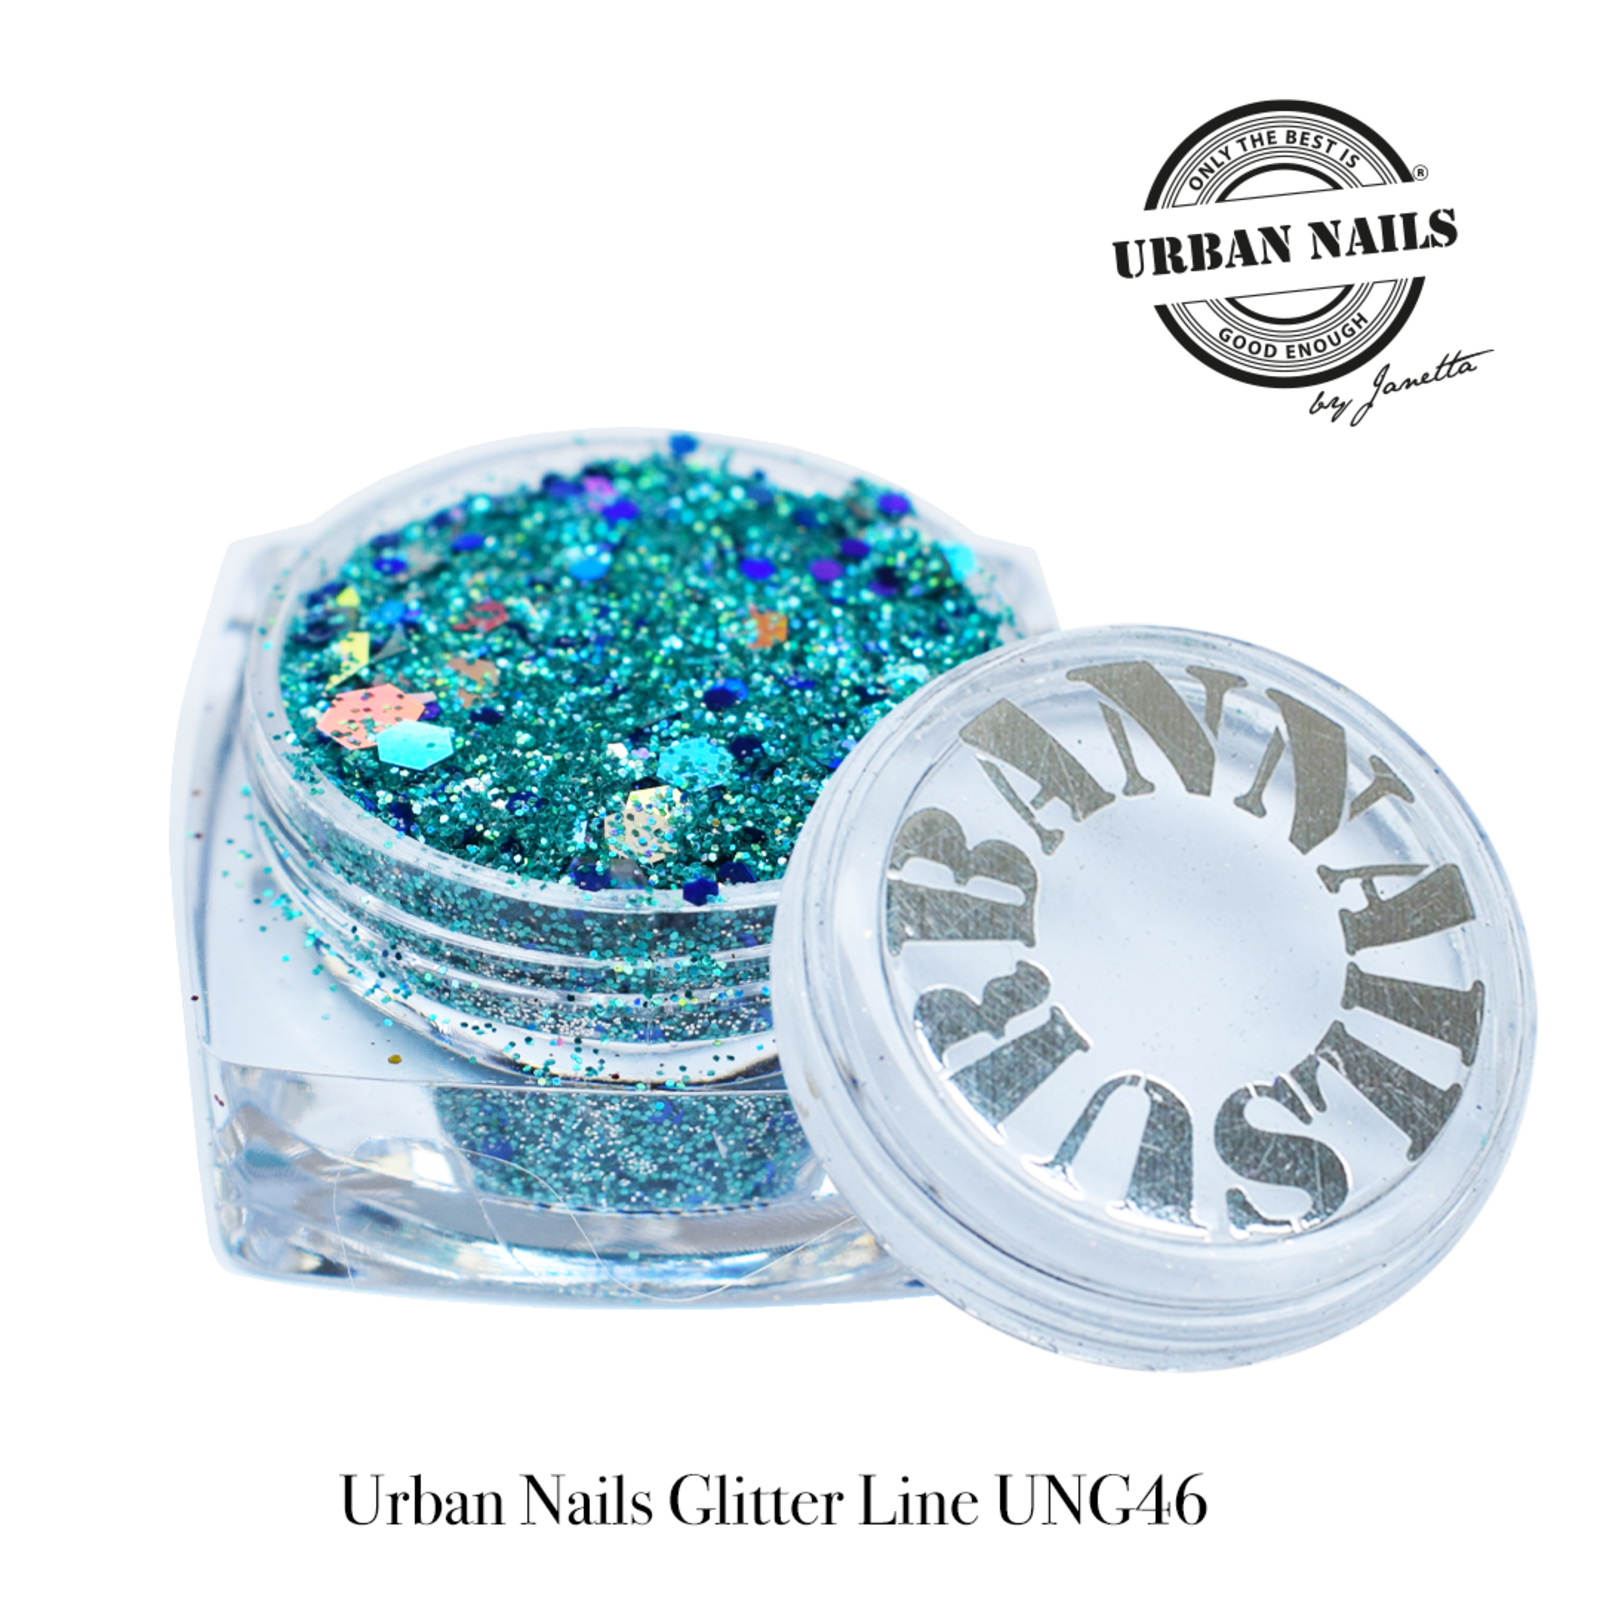 Urban nails Glitter Line UNG46